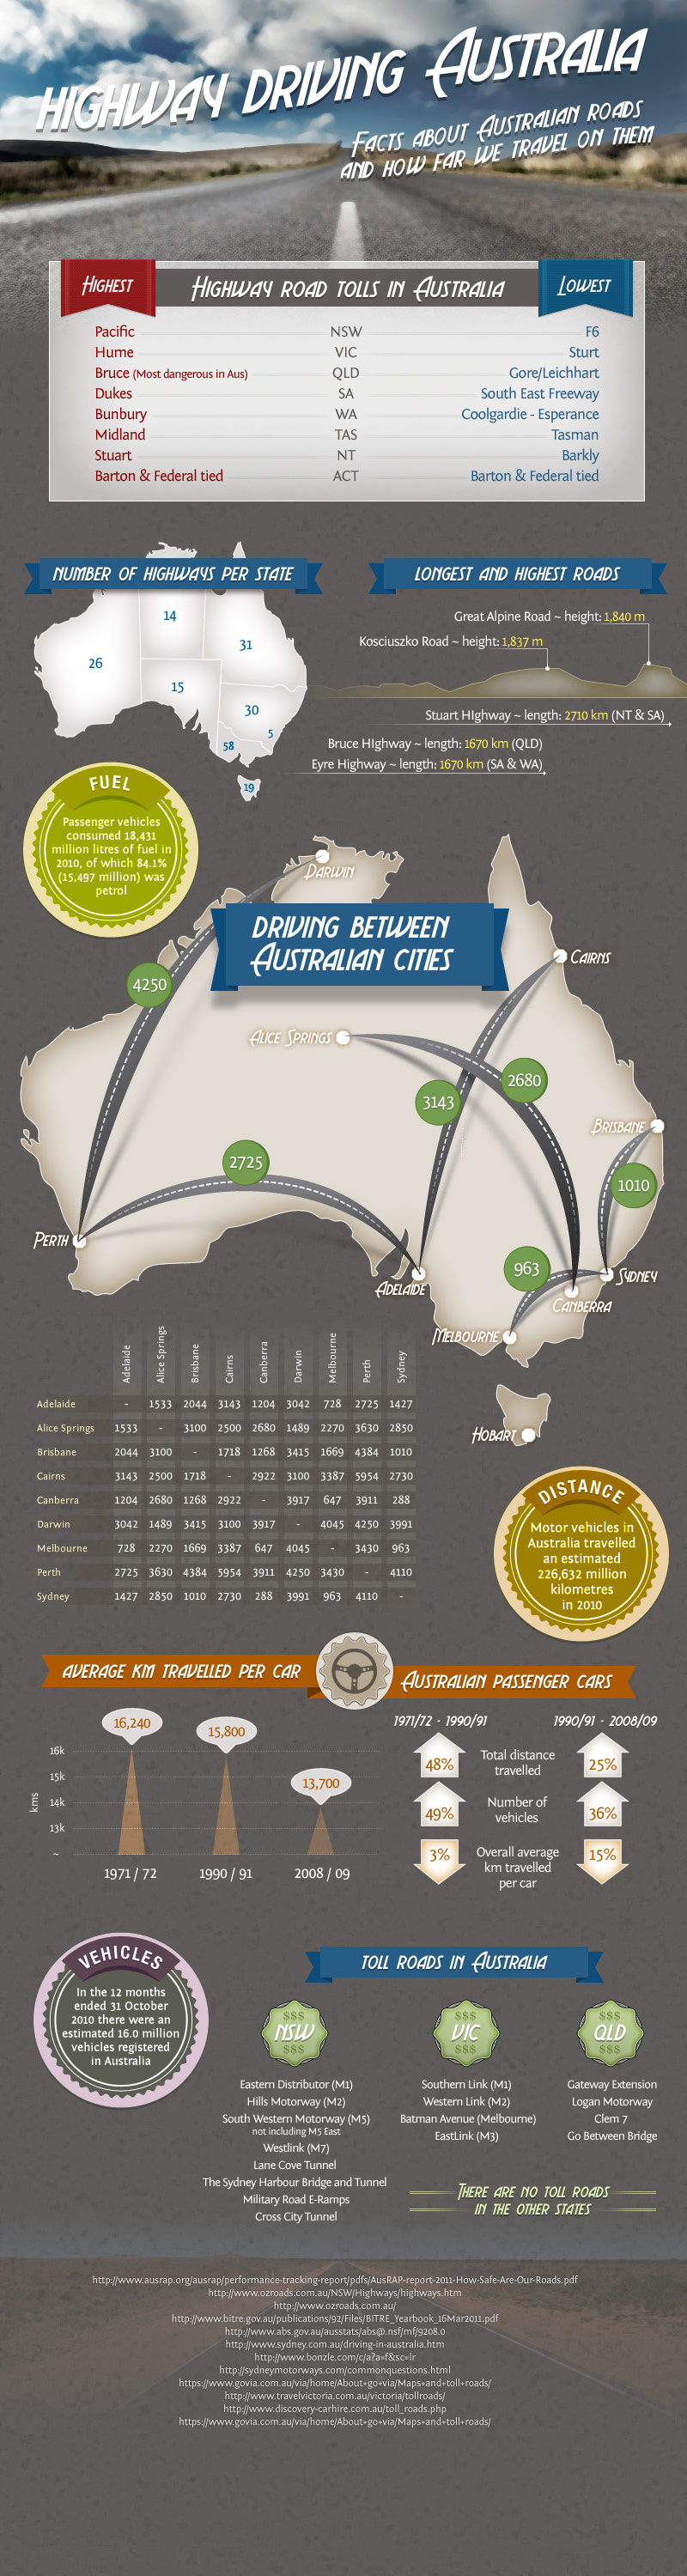 Highway driving in Australia infographic. Highest roads, longest roads, distance between Australian capitals, road tolls and more.